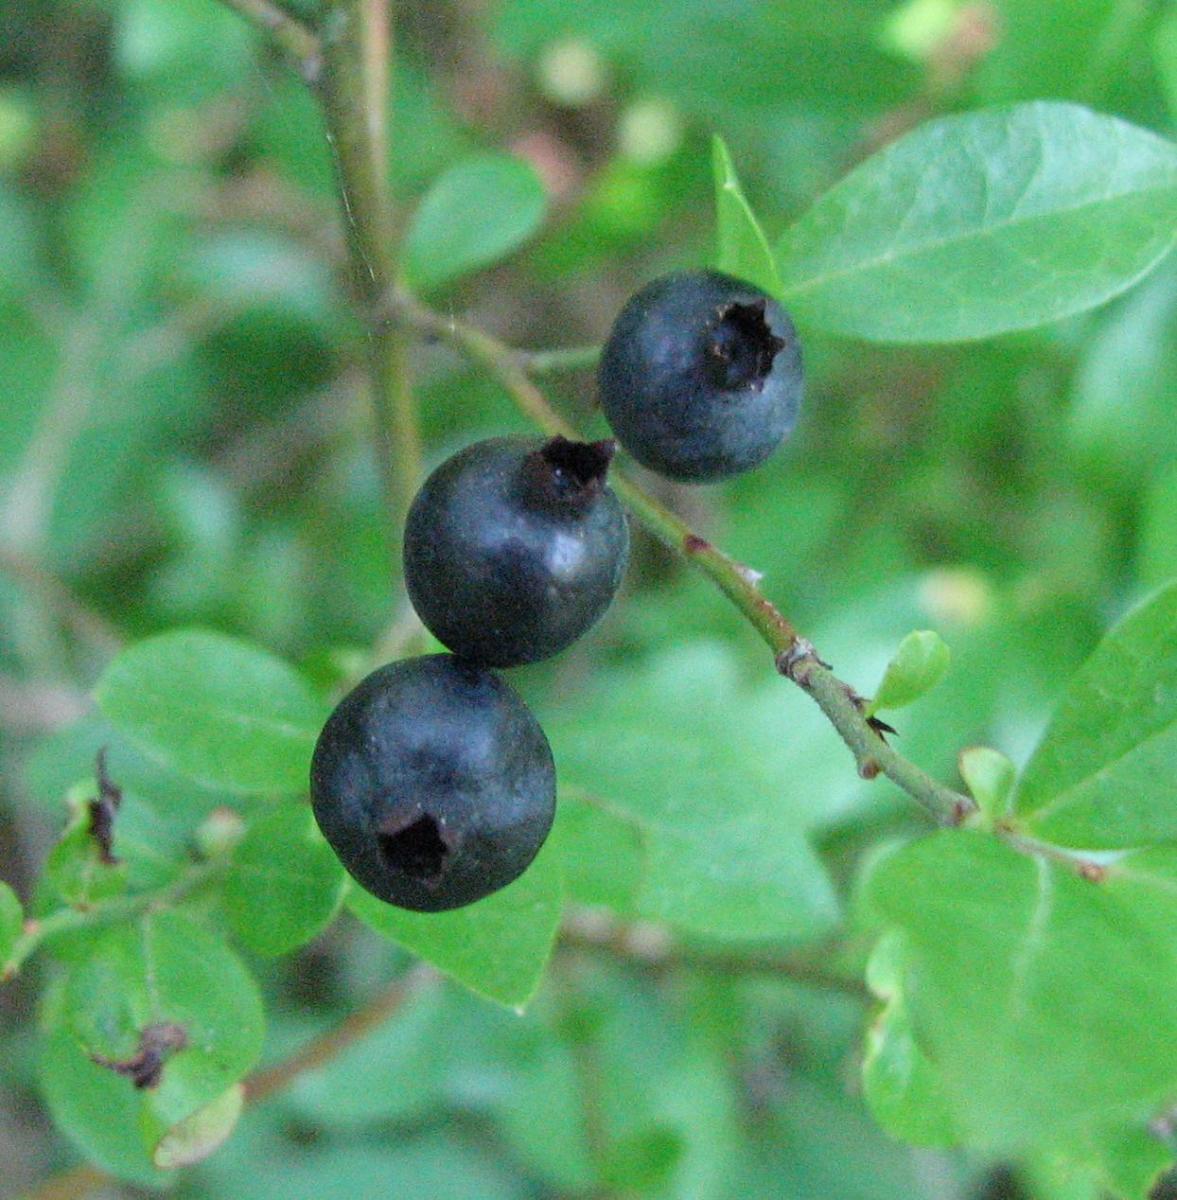 Wild blueberries also called huckleberries